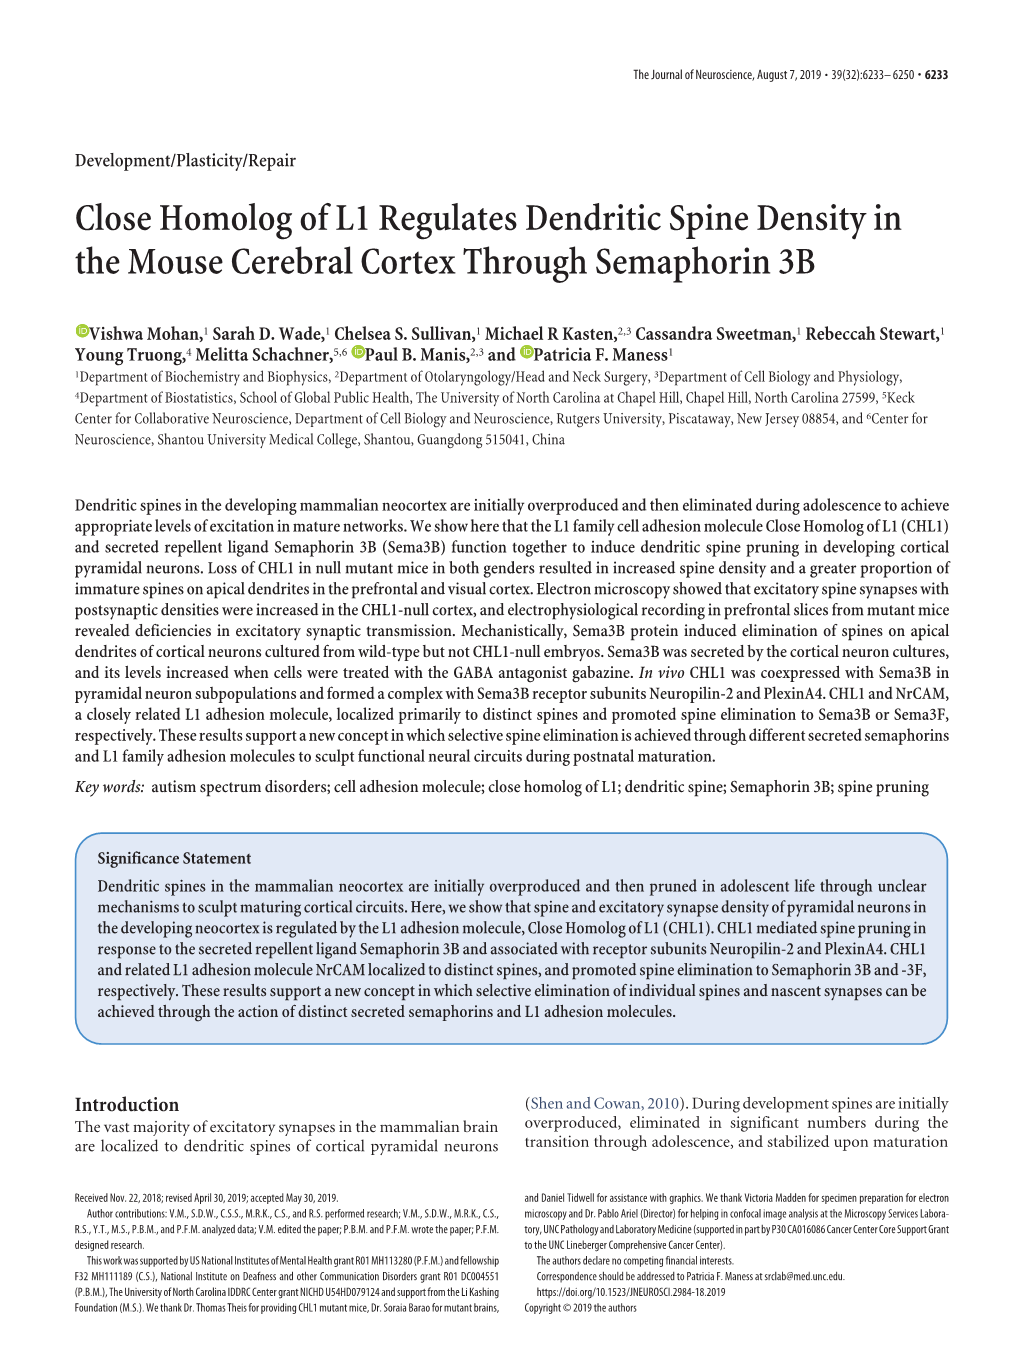 Close Homolog of L1 Regulates Dendritic Spine Density in the Mouse Cerebral Cortex Through Semaphorin 3B